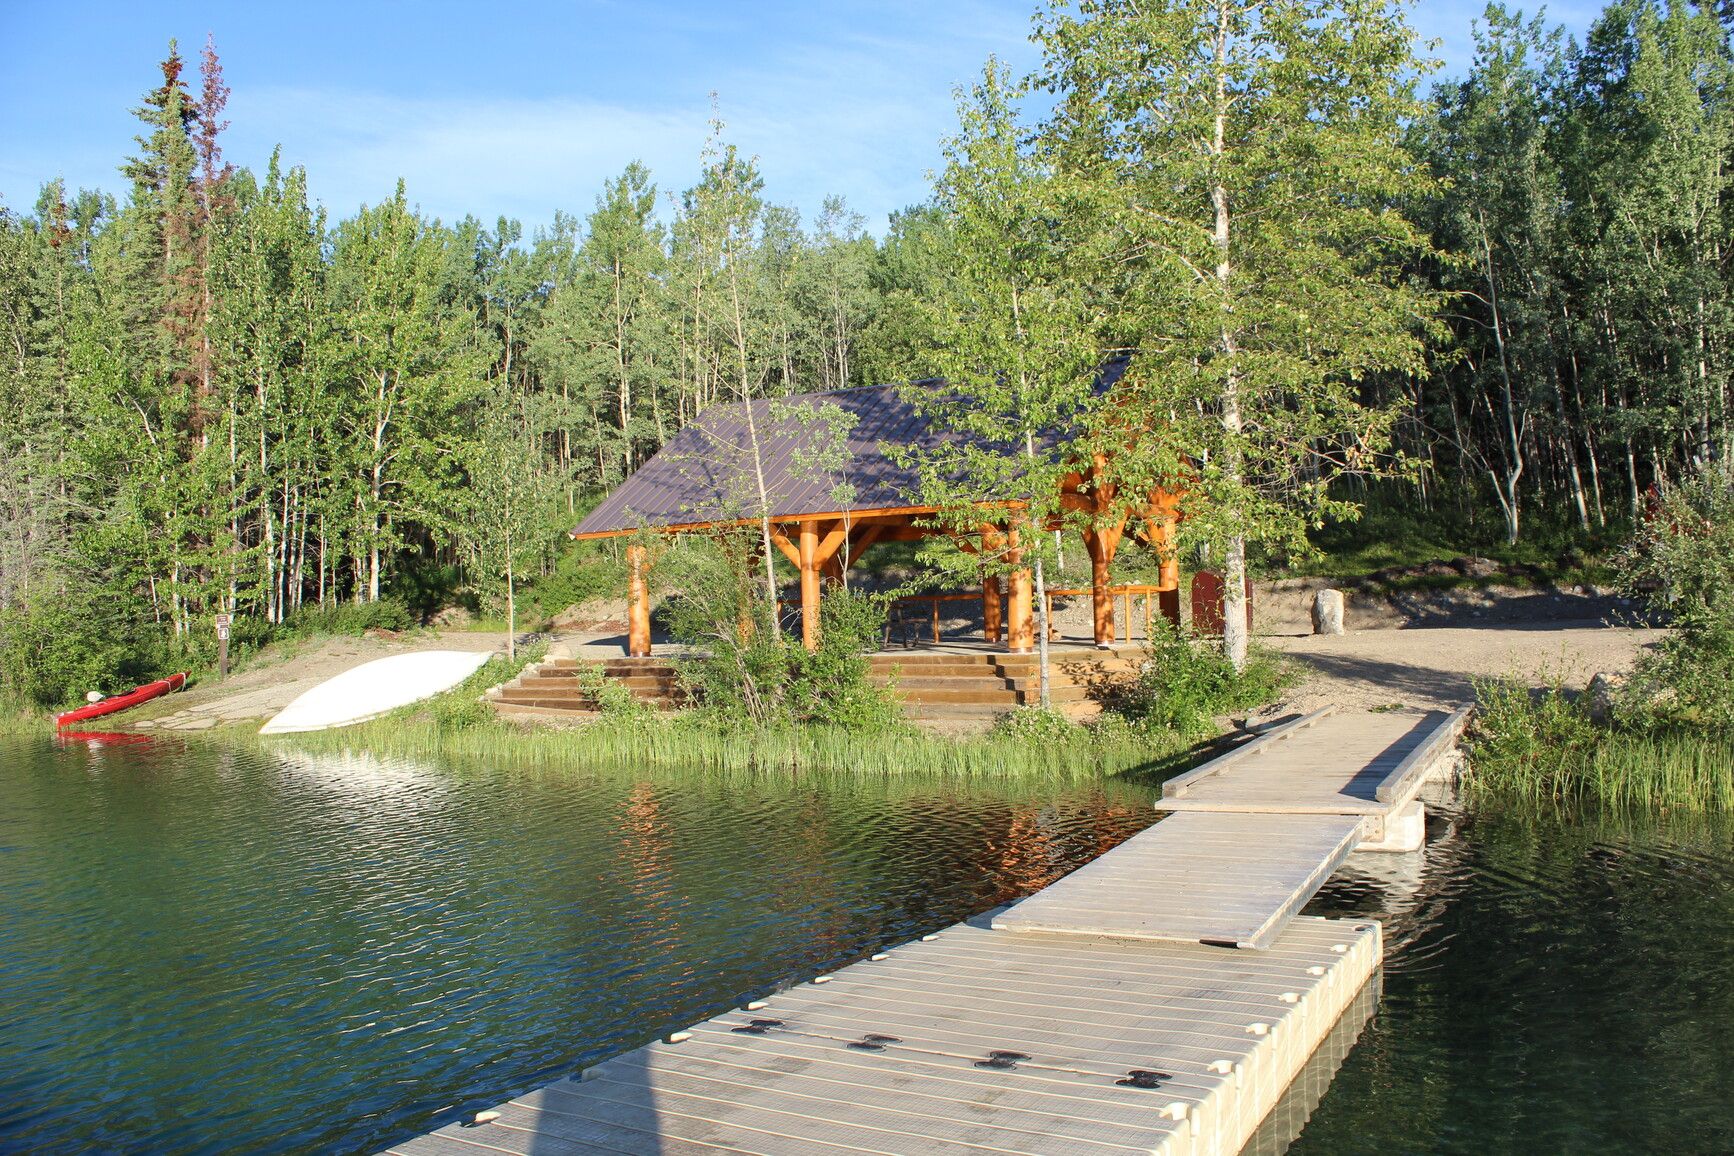 Boya Lake boat launch, dock, and picnic shelter in Tā Ch'ilā Park.